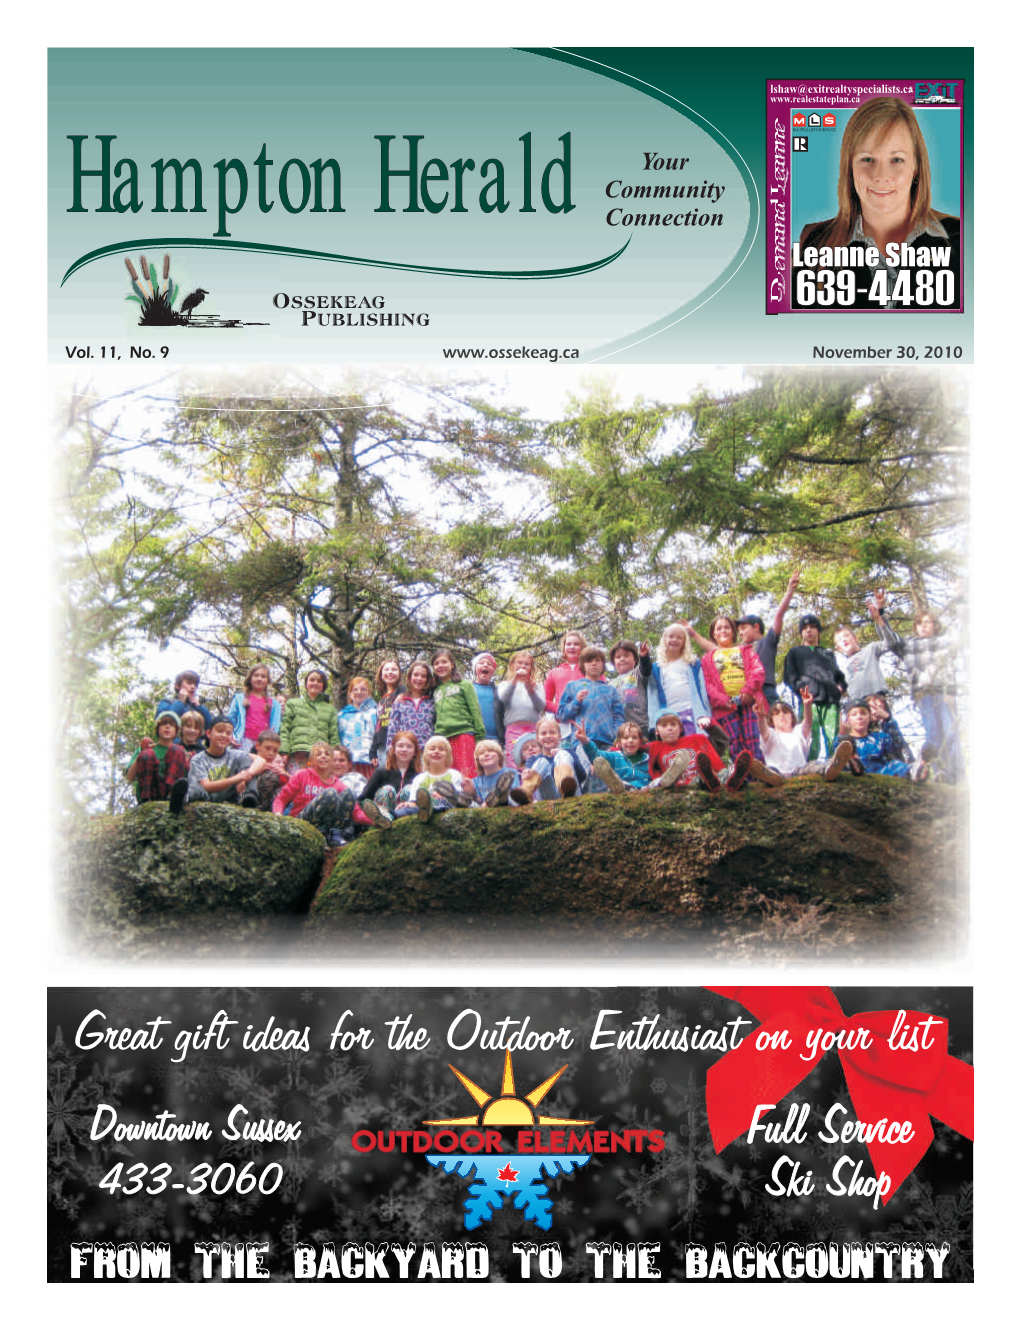 Hampton Herald Connection Leanne Shaw